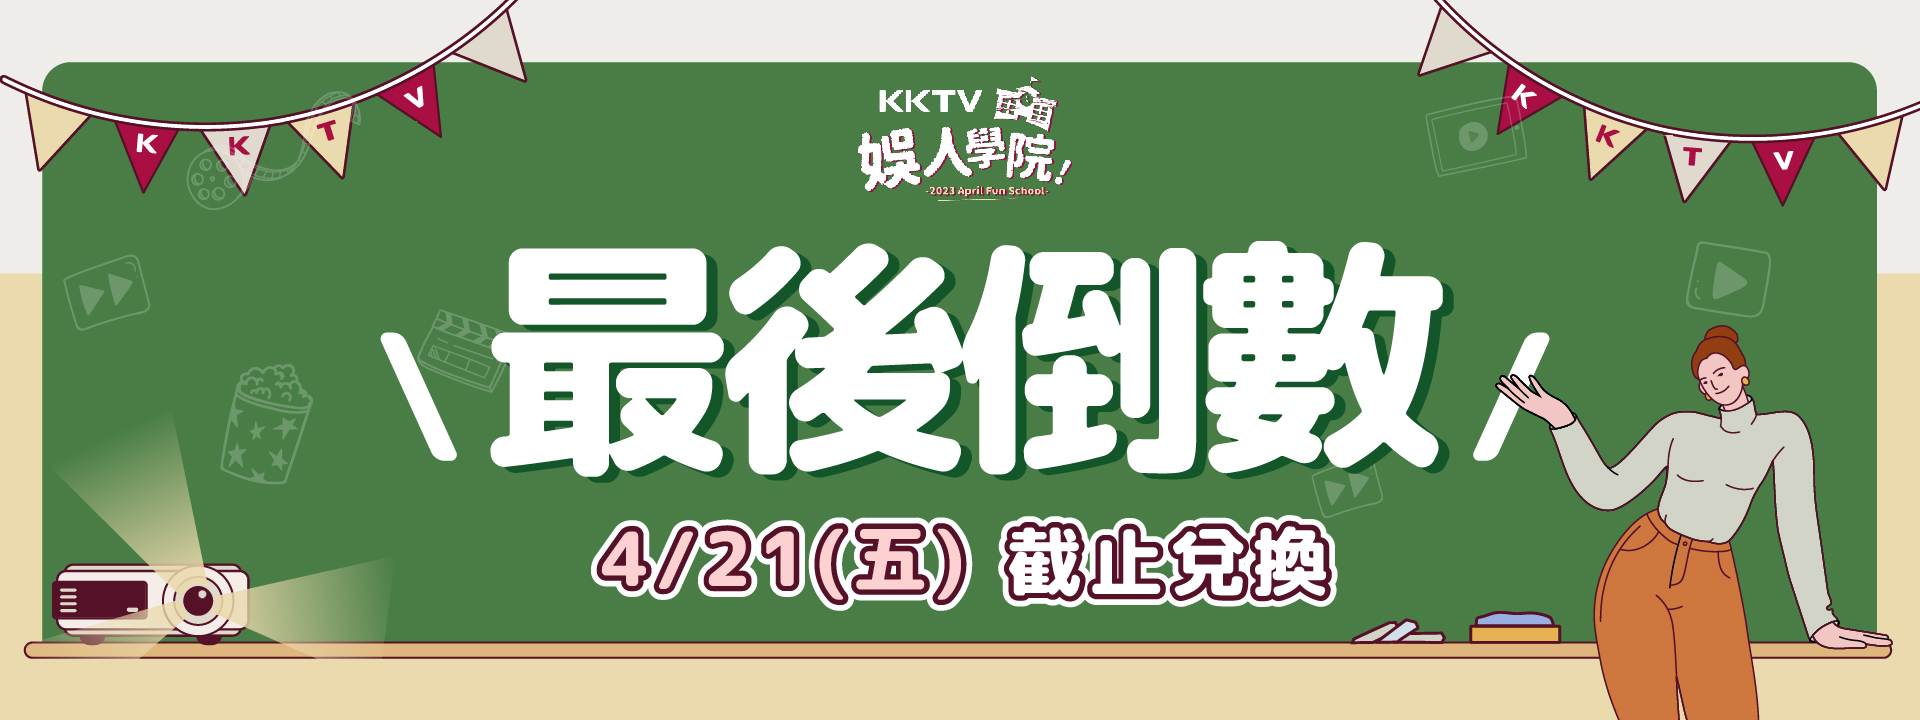 KKTV 娛人學院｜21天免費追劇序號放送中宣傳